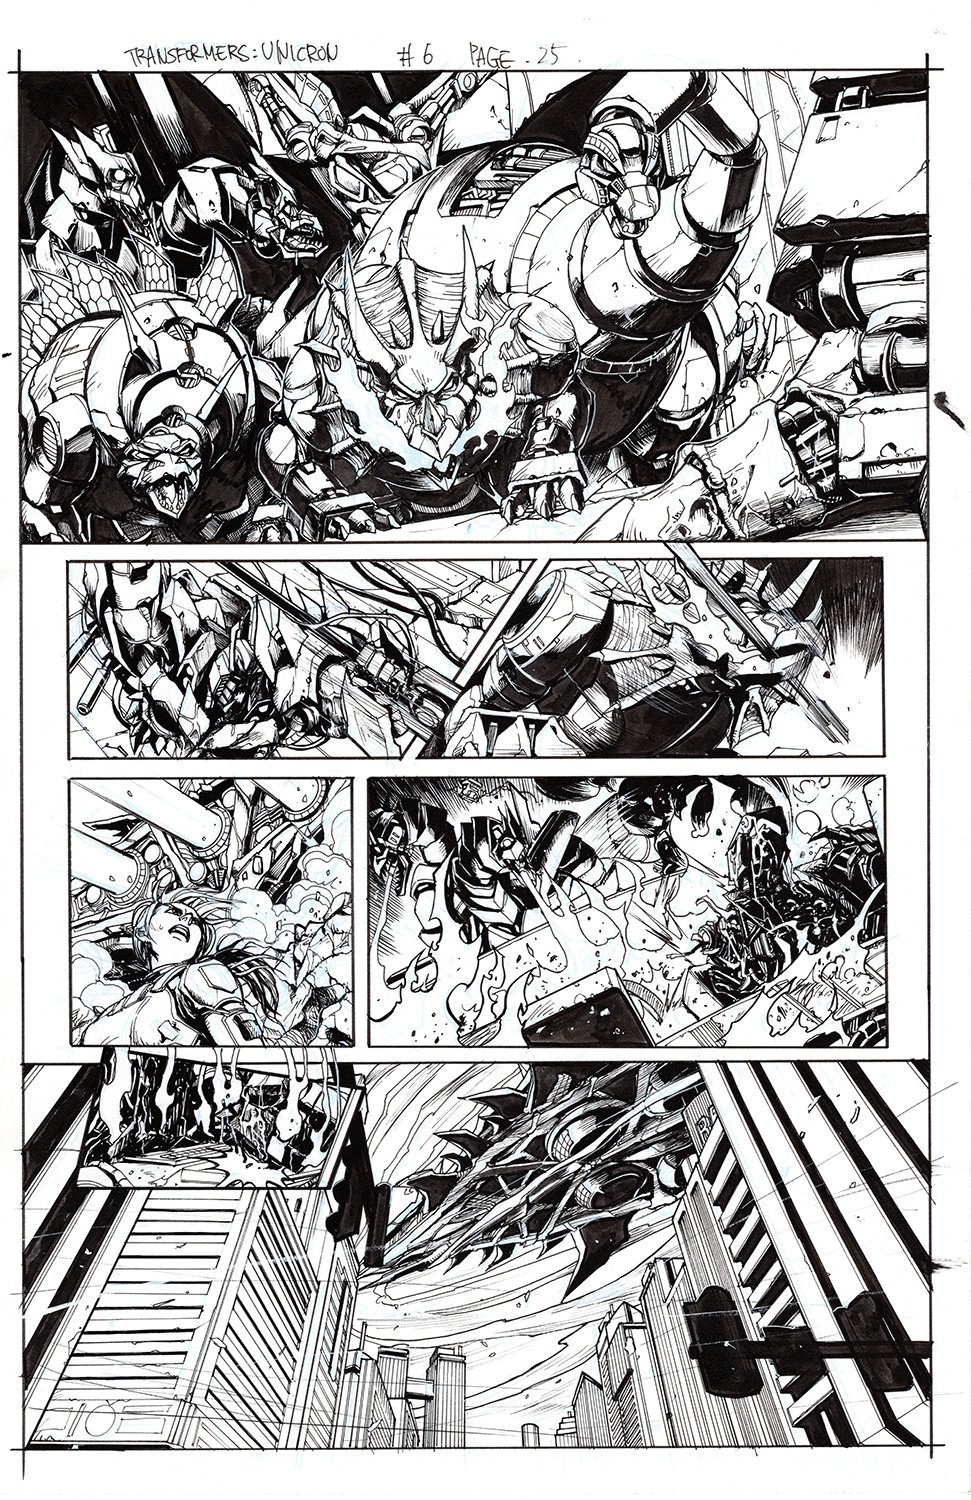 Transformers: Unicron #6 Page 25